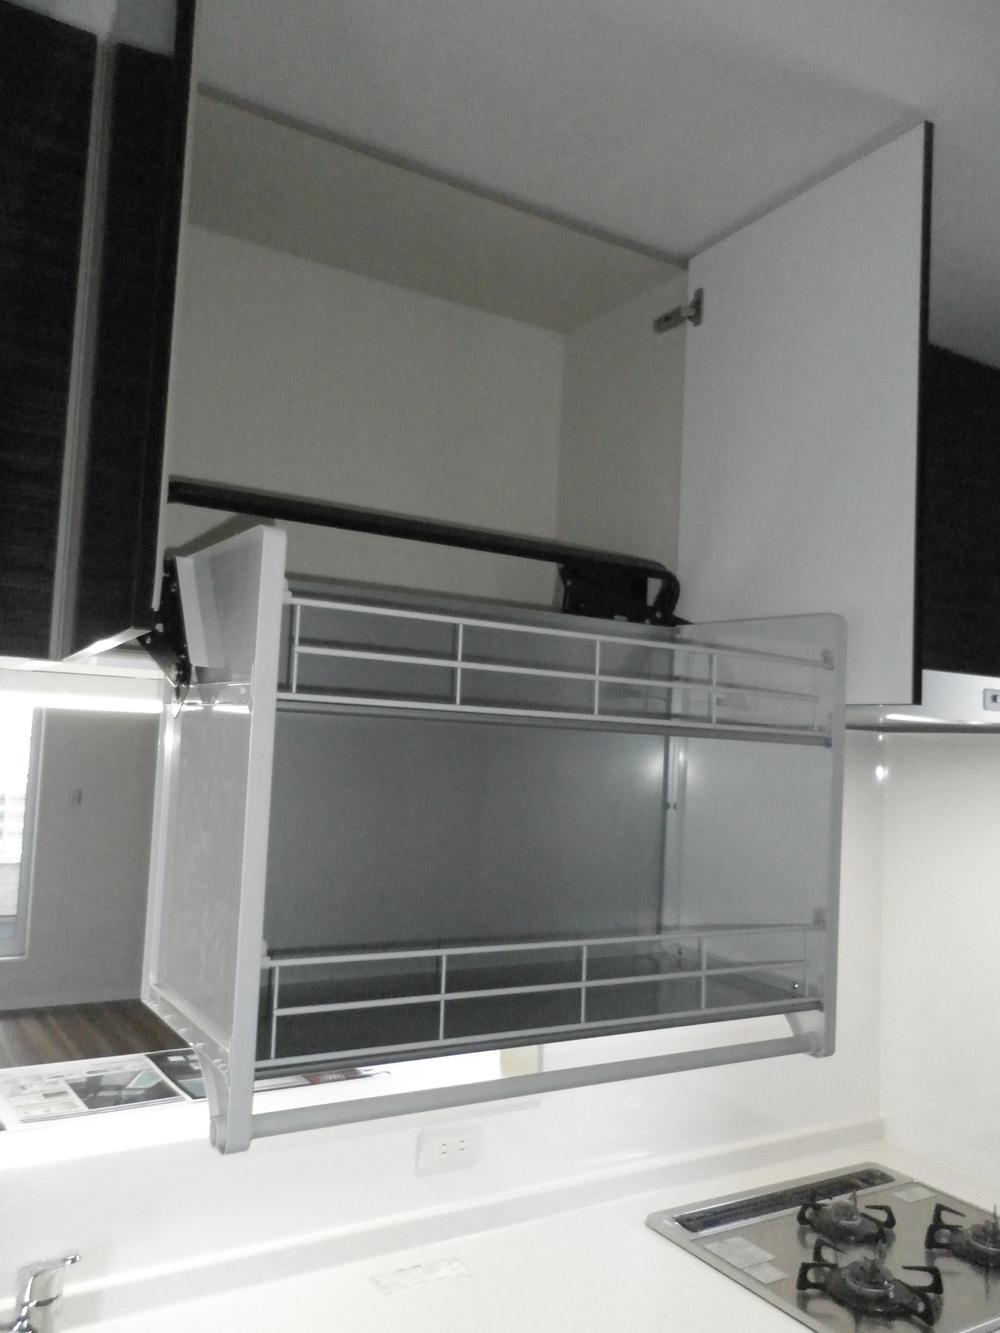 Same specifications photo (kitchen). Kitchen storage construction cases